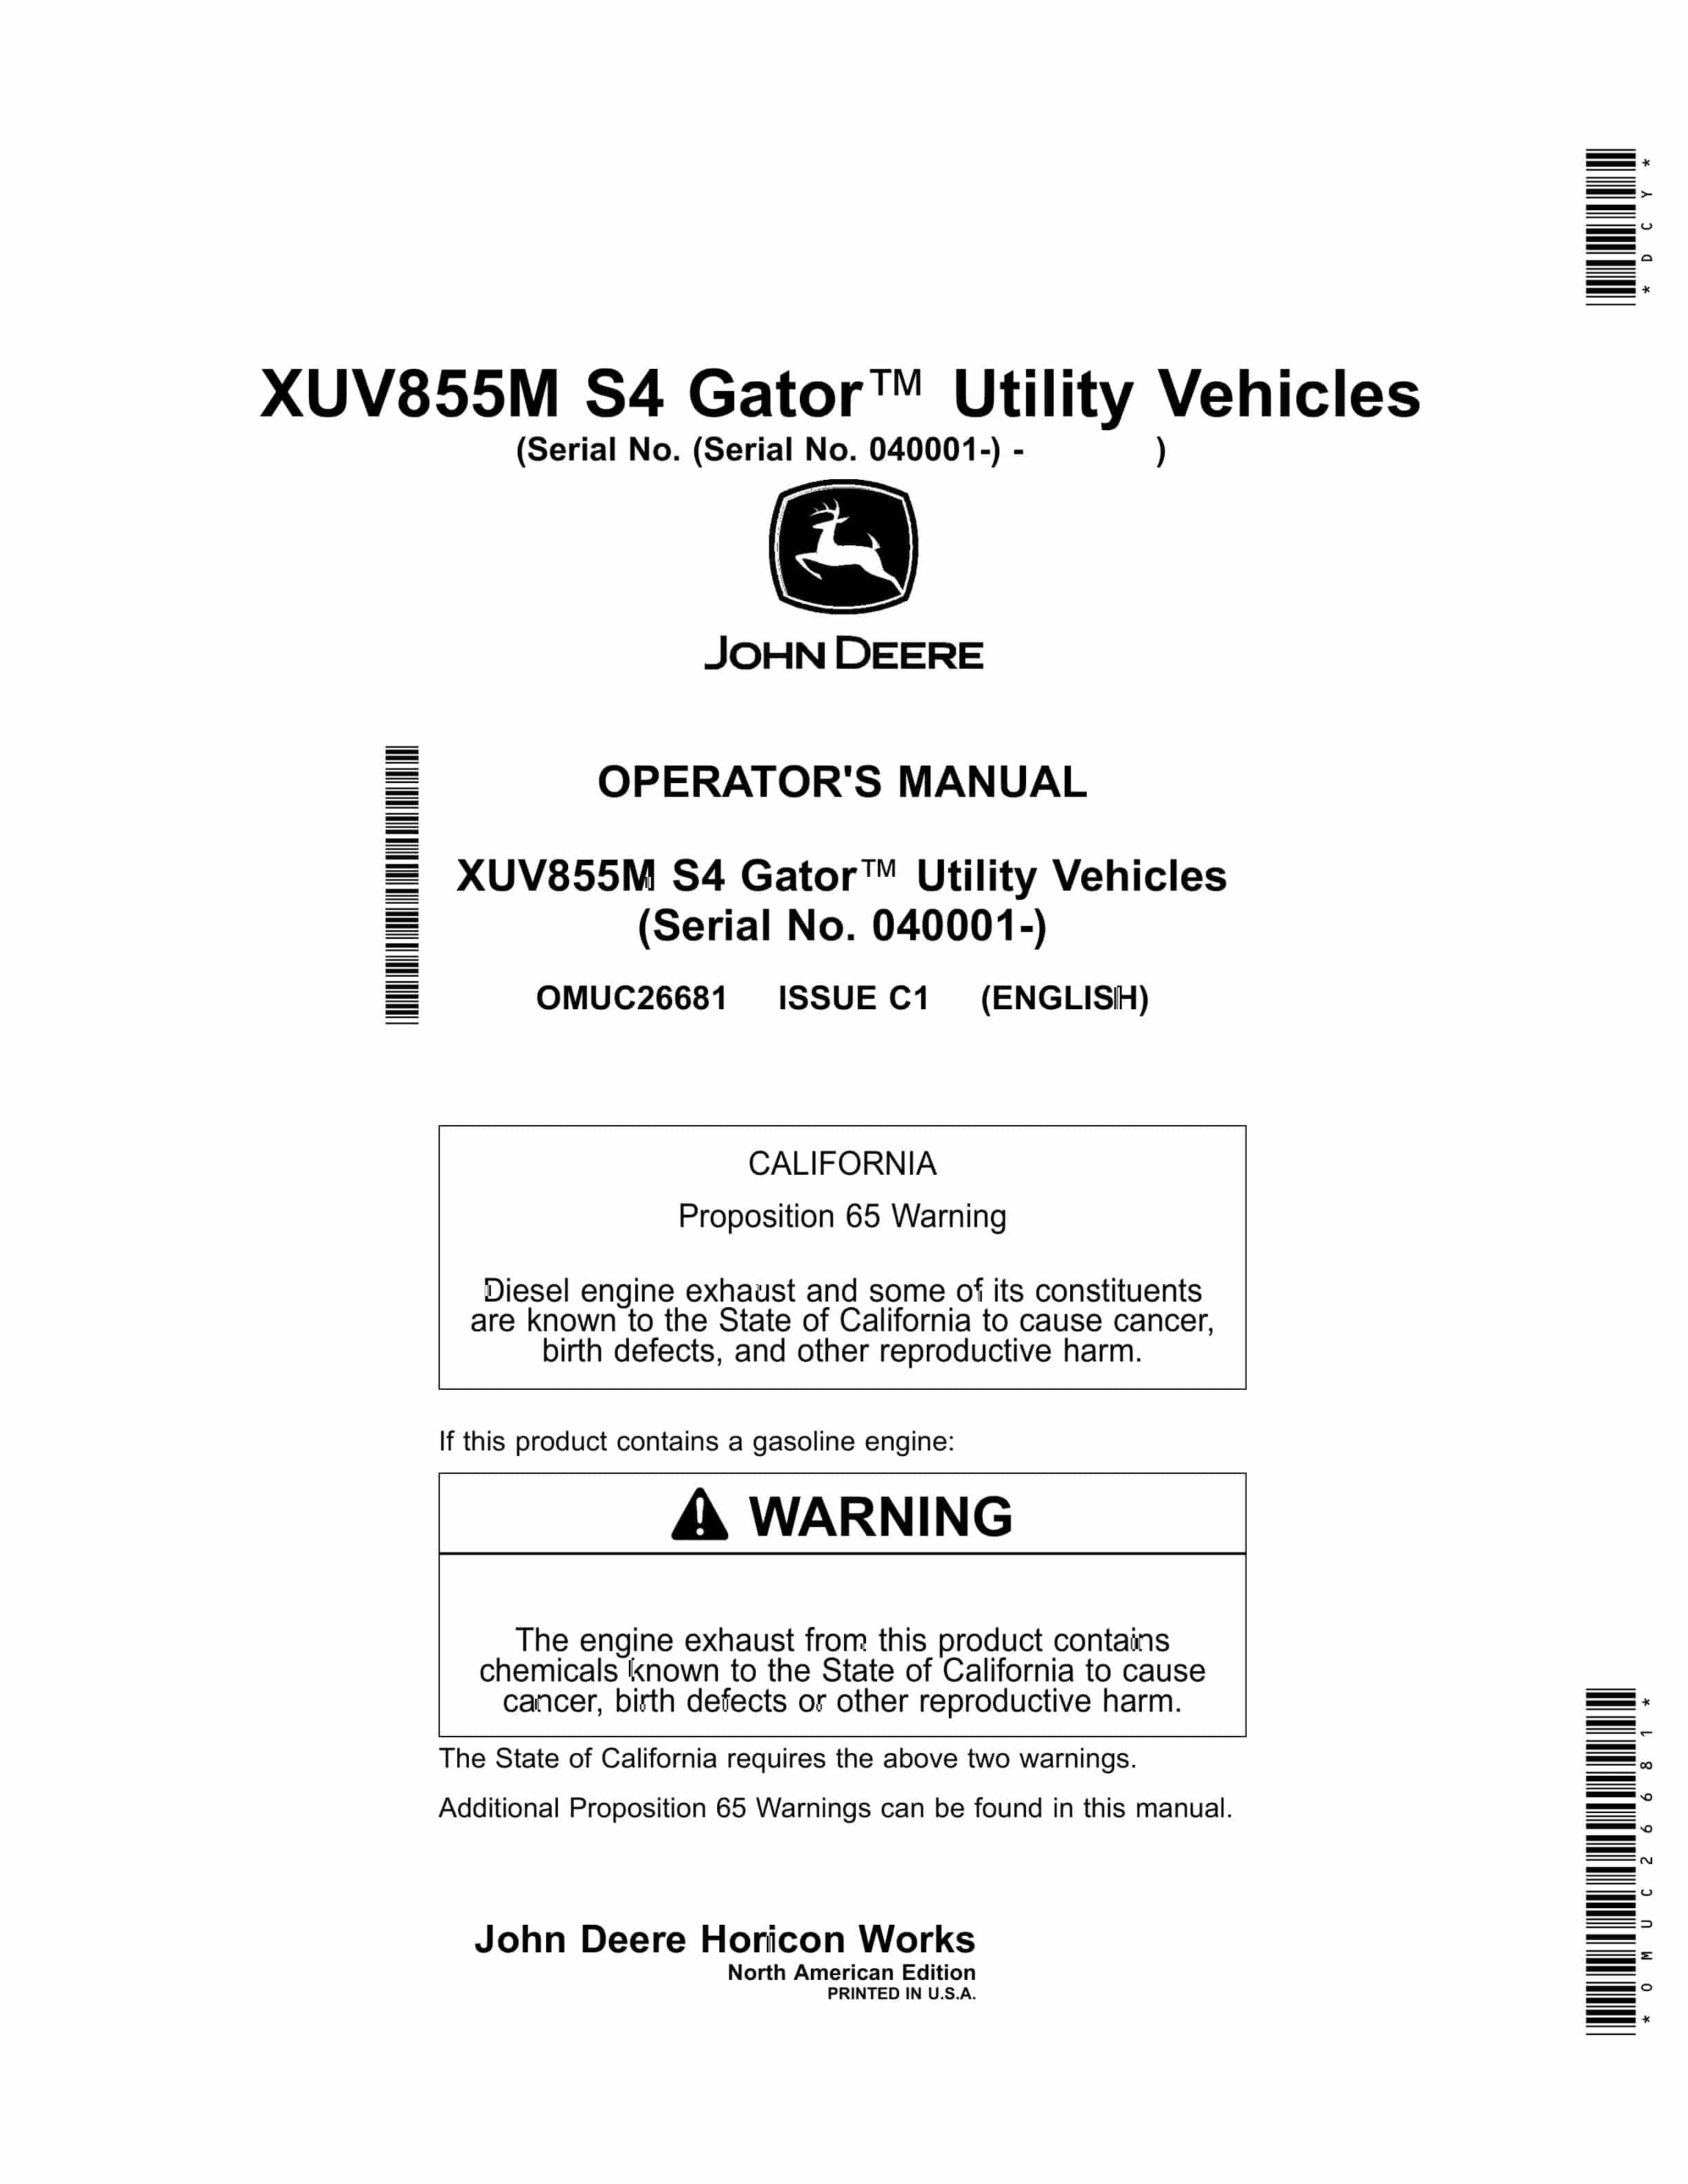 John Deere XUV855M S4 Gator Utility Vehicles Operator Manual OMUC26681 1